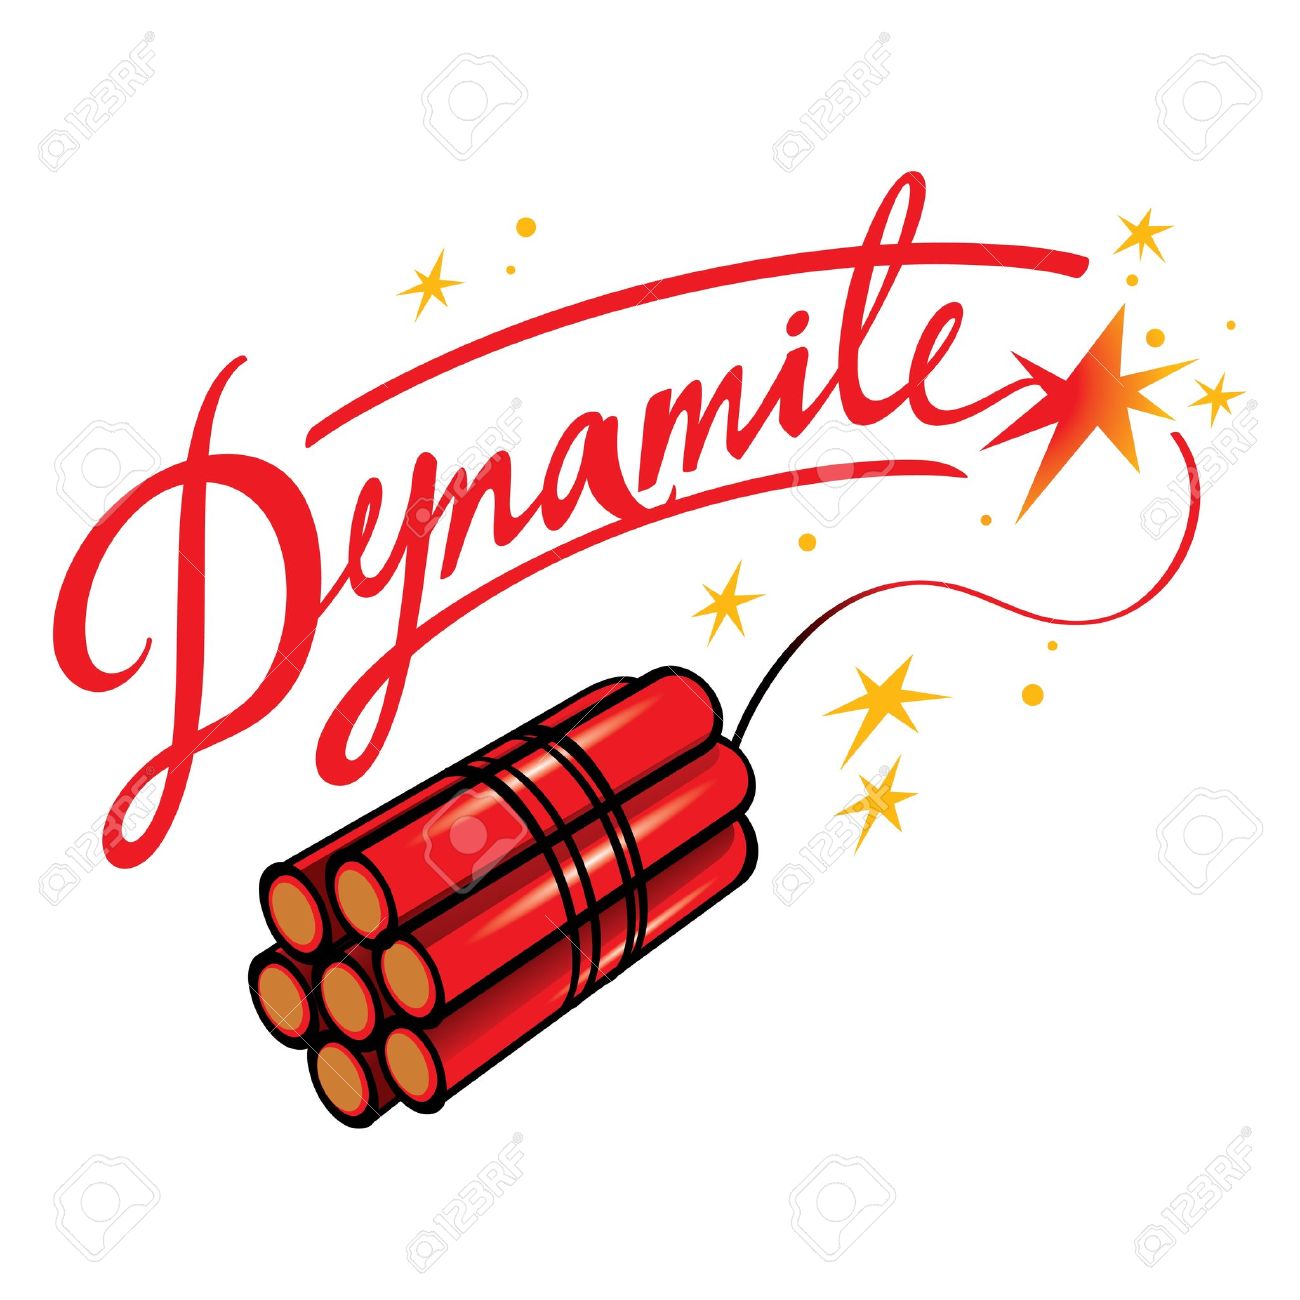 dynamite: Dynamite bomb .